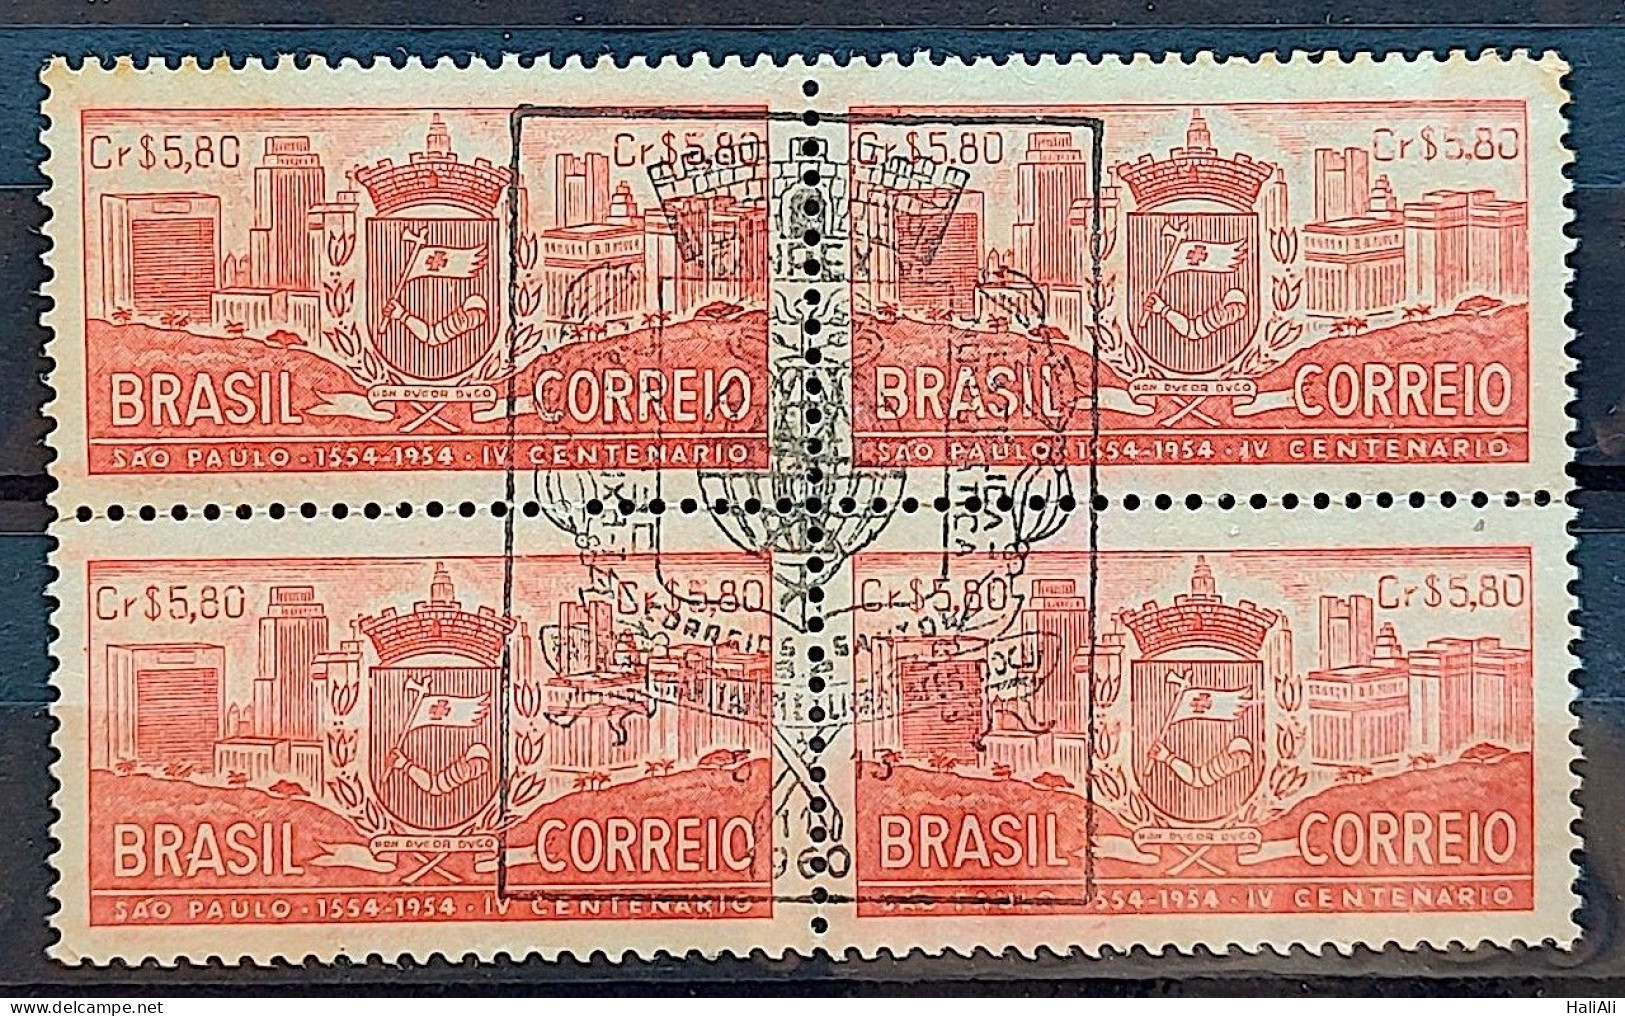 C 332 Brazil Stamp 4 Centenary Of Sao Paulo 1954 Block Of 4 CBC SP - Unused Stamps